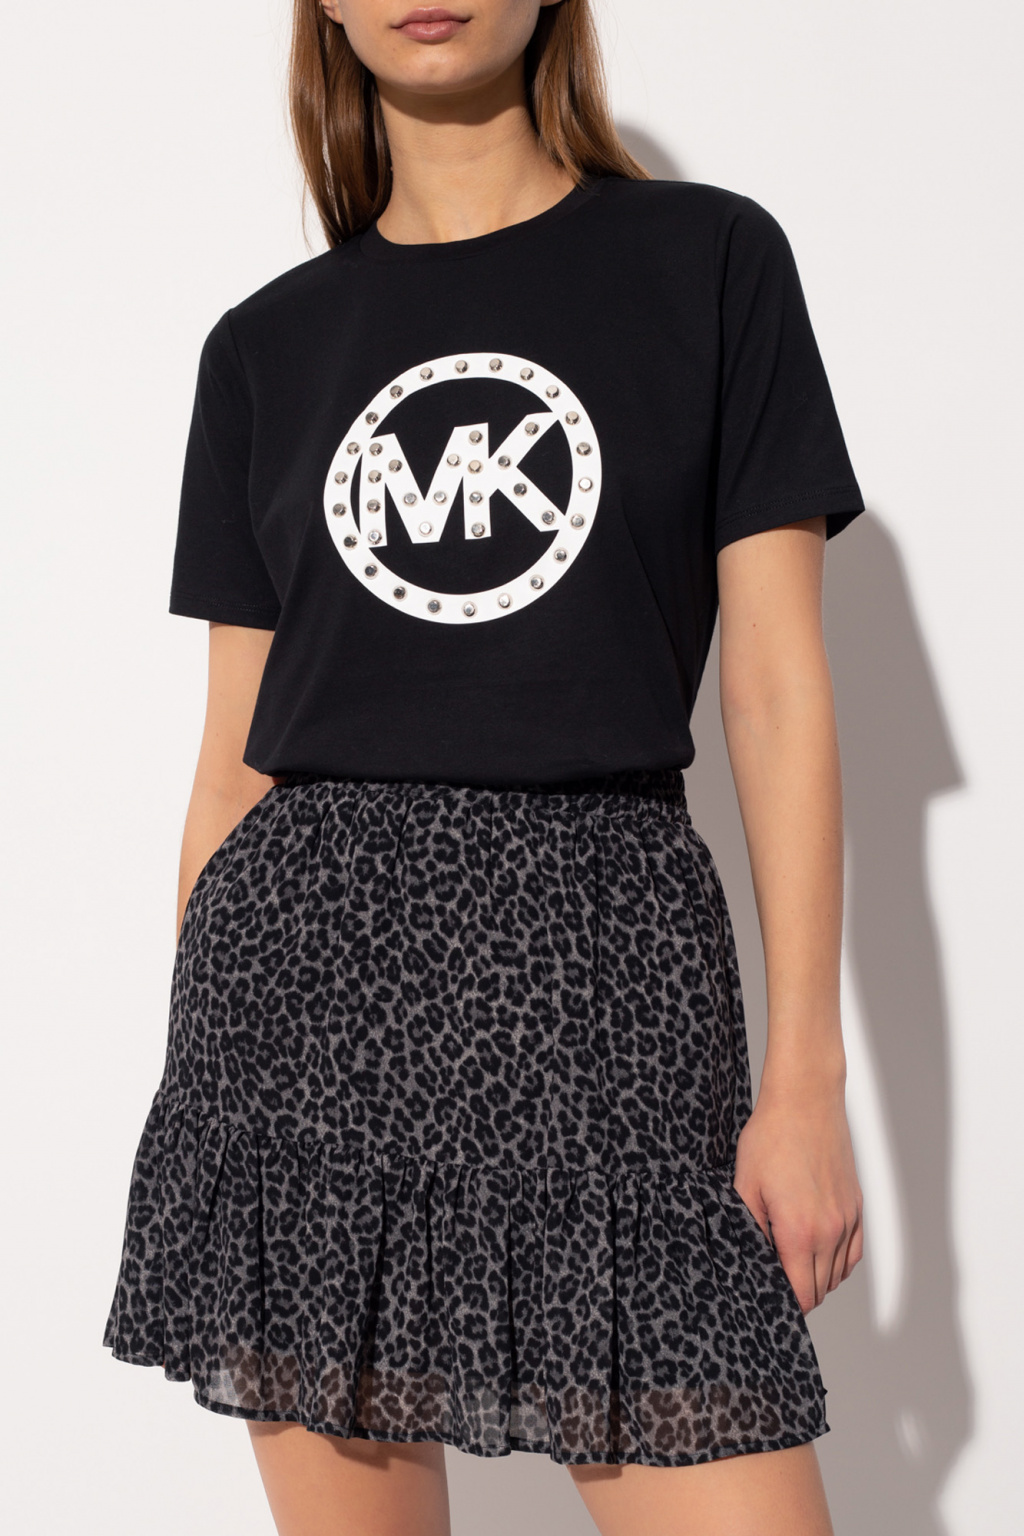 pædagog Overlegenhed Bare overfyldt Black Logo T-shirt Michael Michael Kors - Vitkac TW